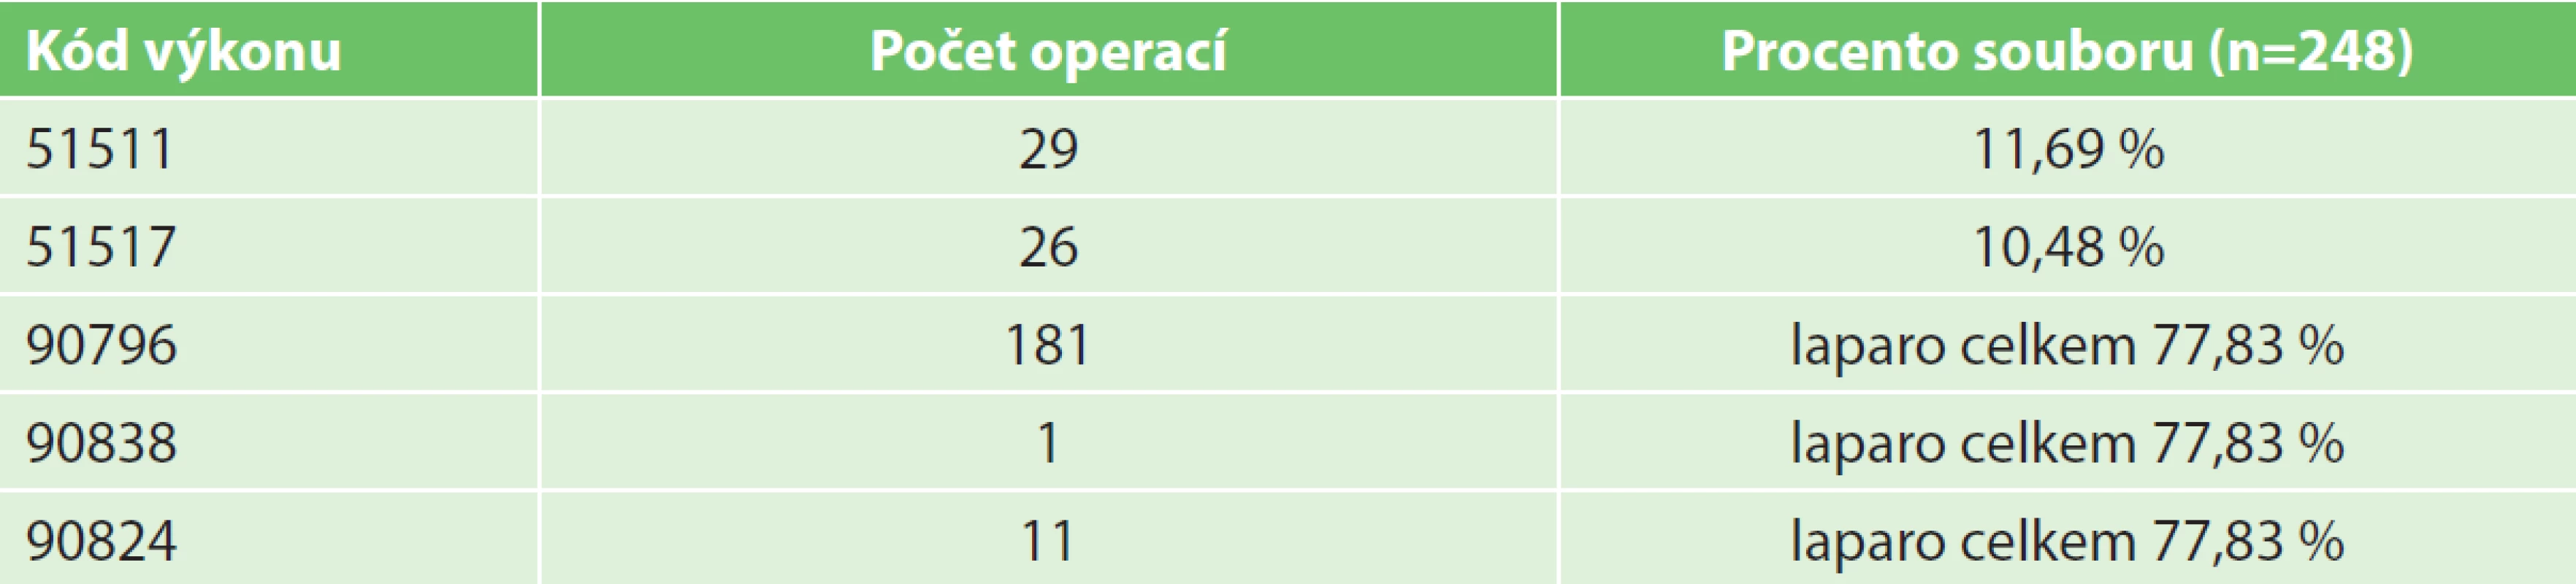 Jednodenní chirurgie – počty výkonů podle typu operace (n=248)
Tab. 2: Outpatiens – number of operations according to type of procedure (n=248)